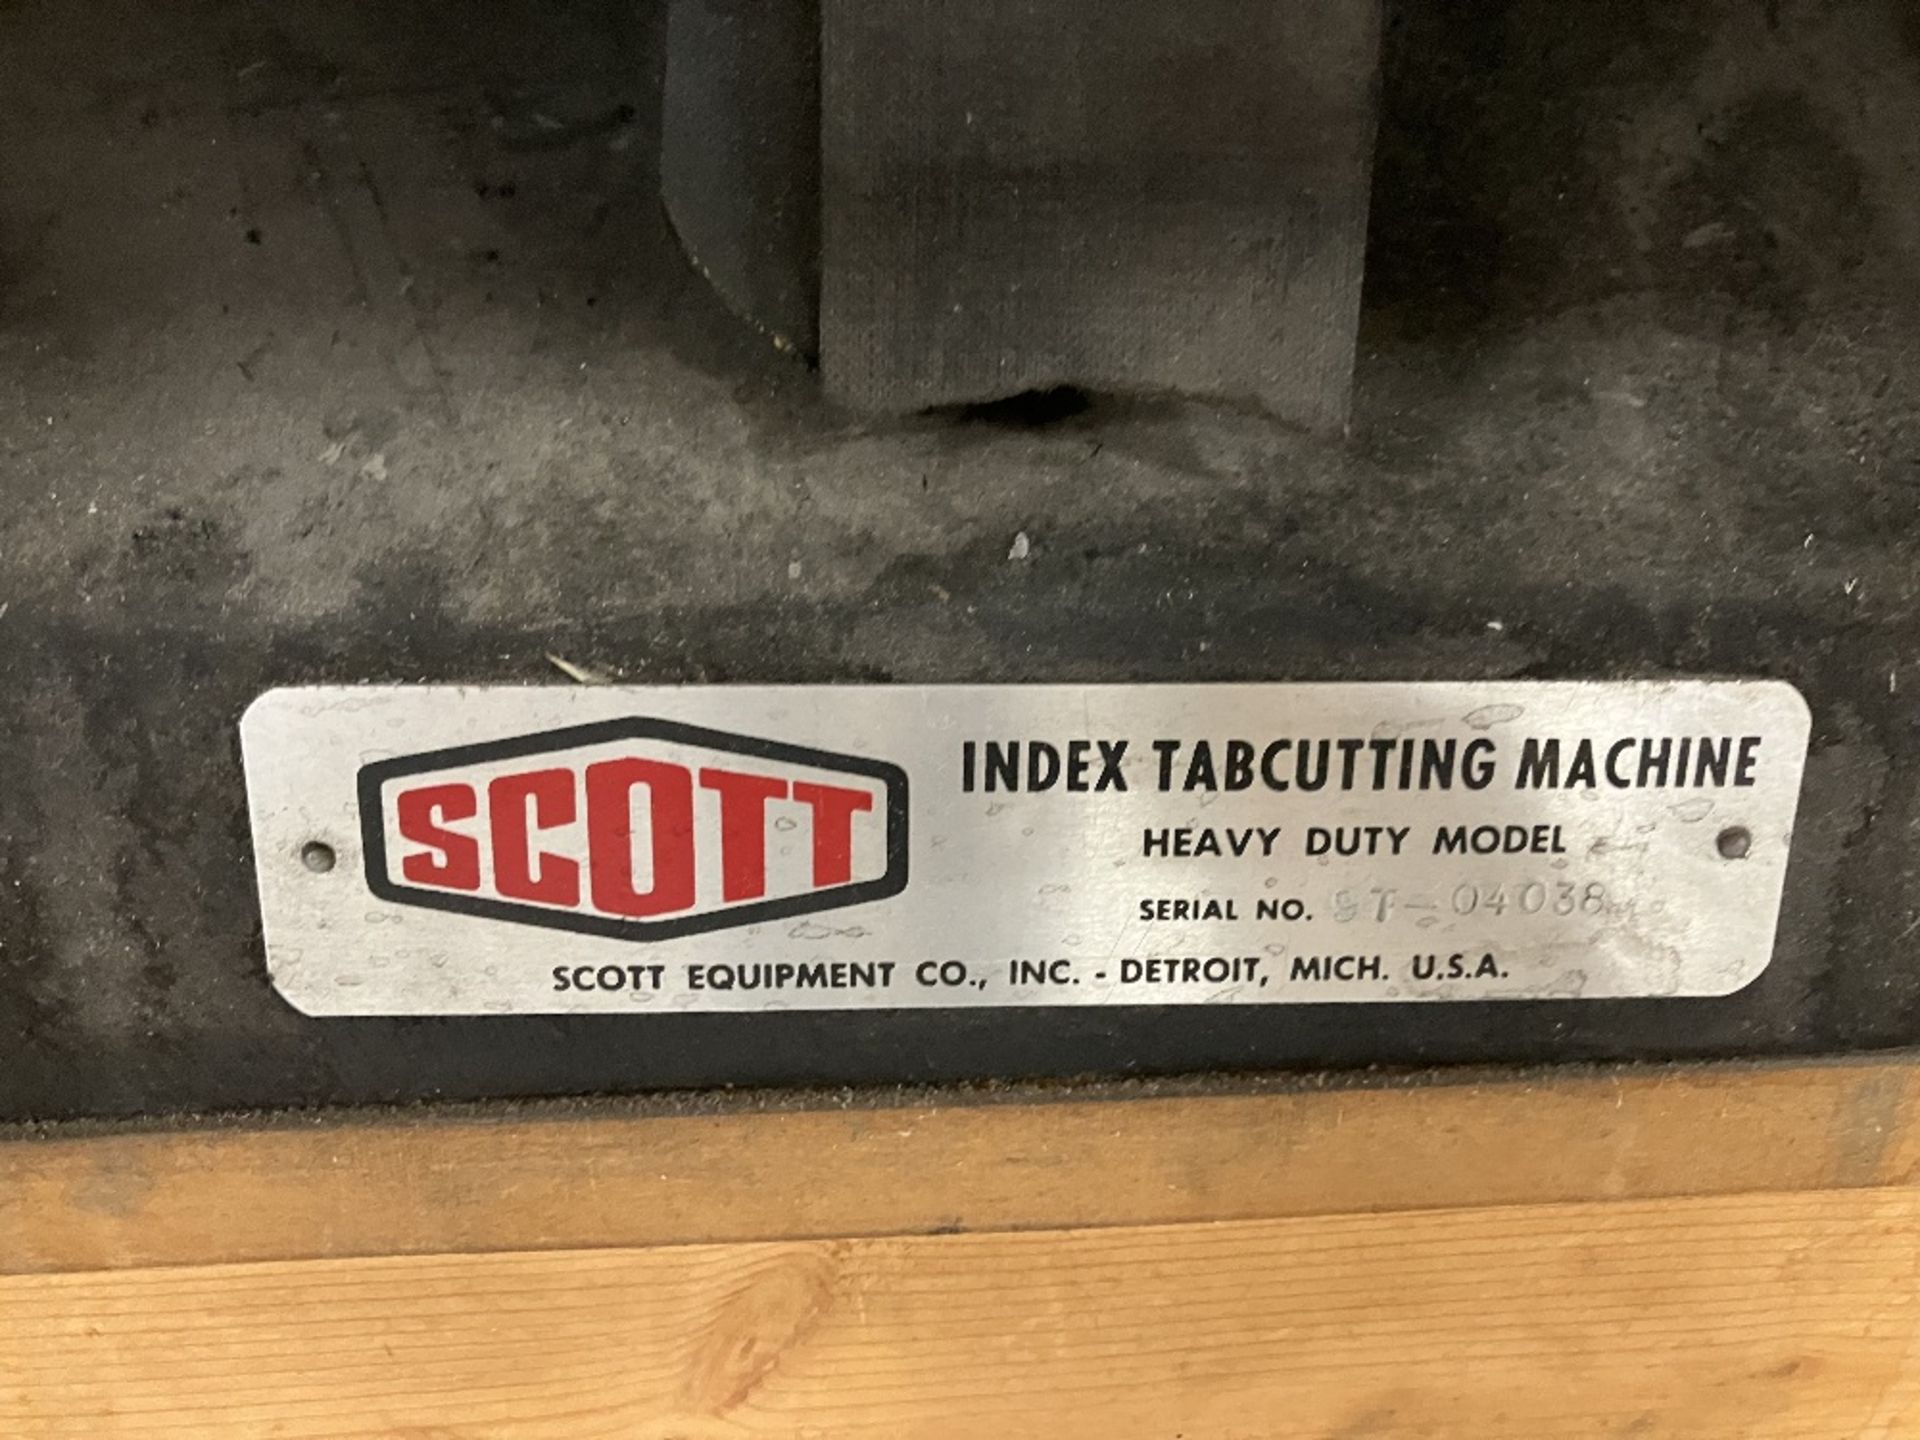 Scott Heavy Duty Index Tabcutting Machine - Image 3 of 3